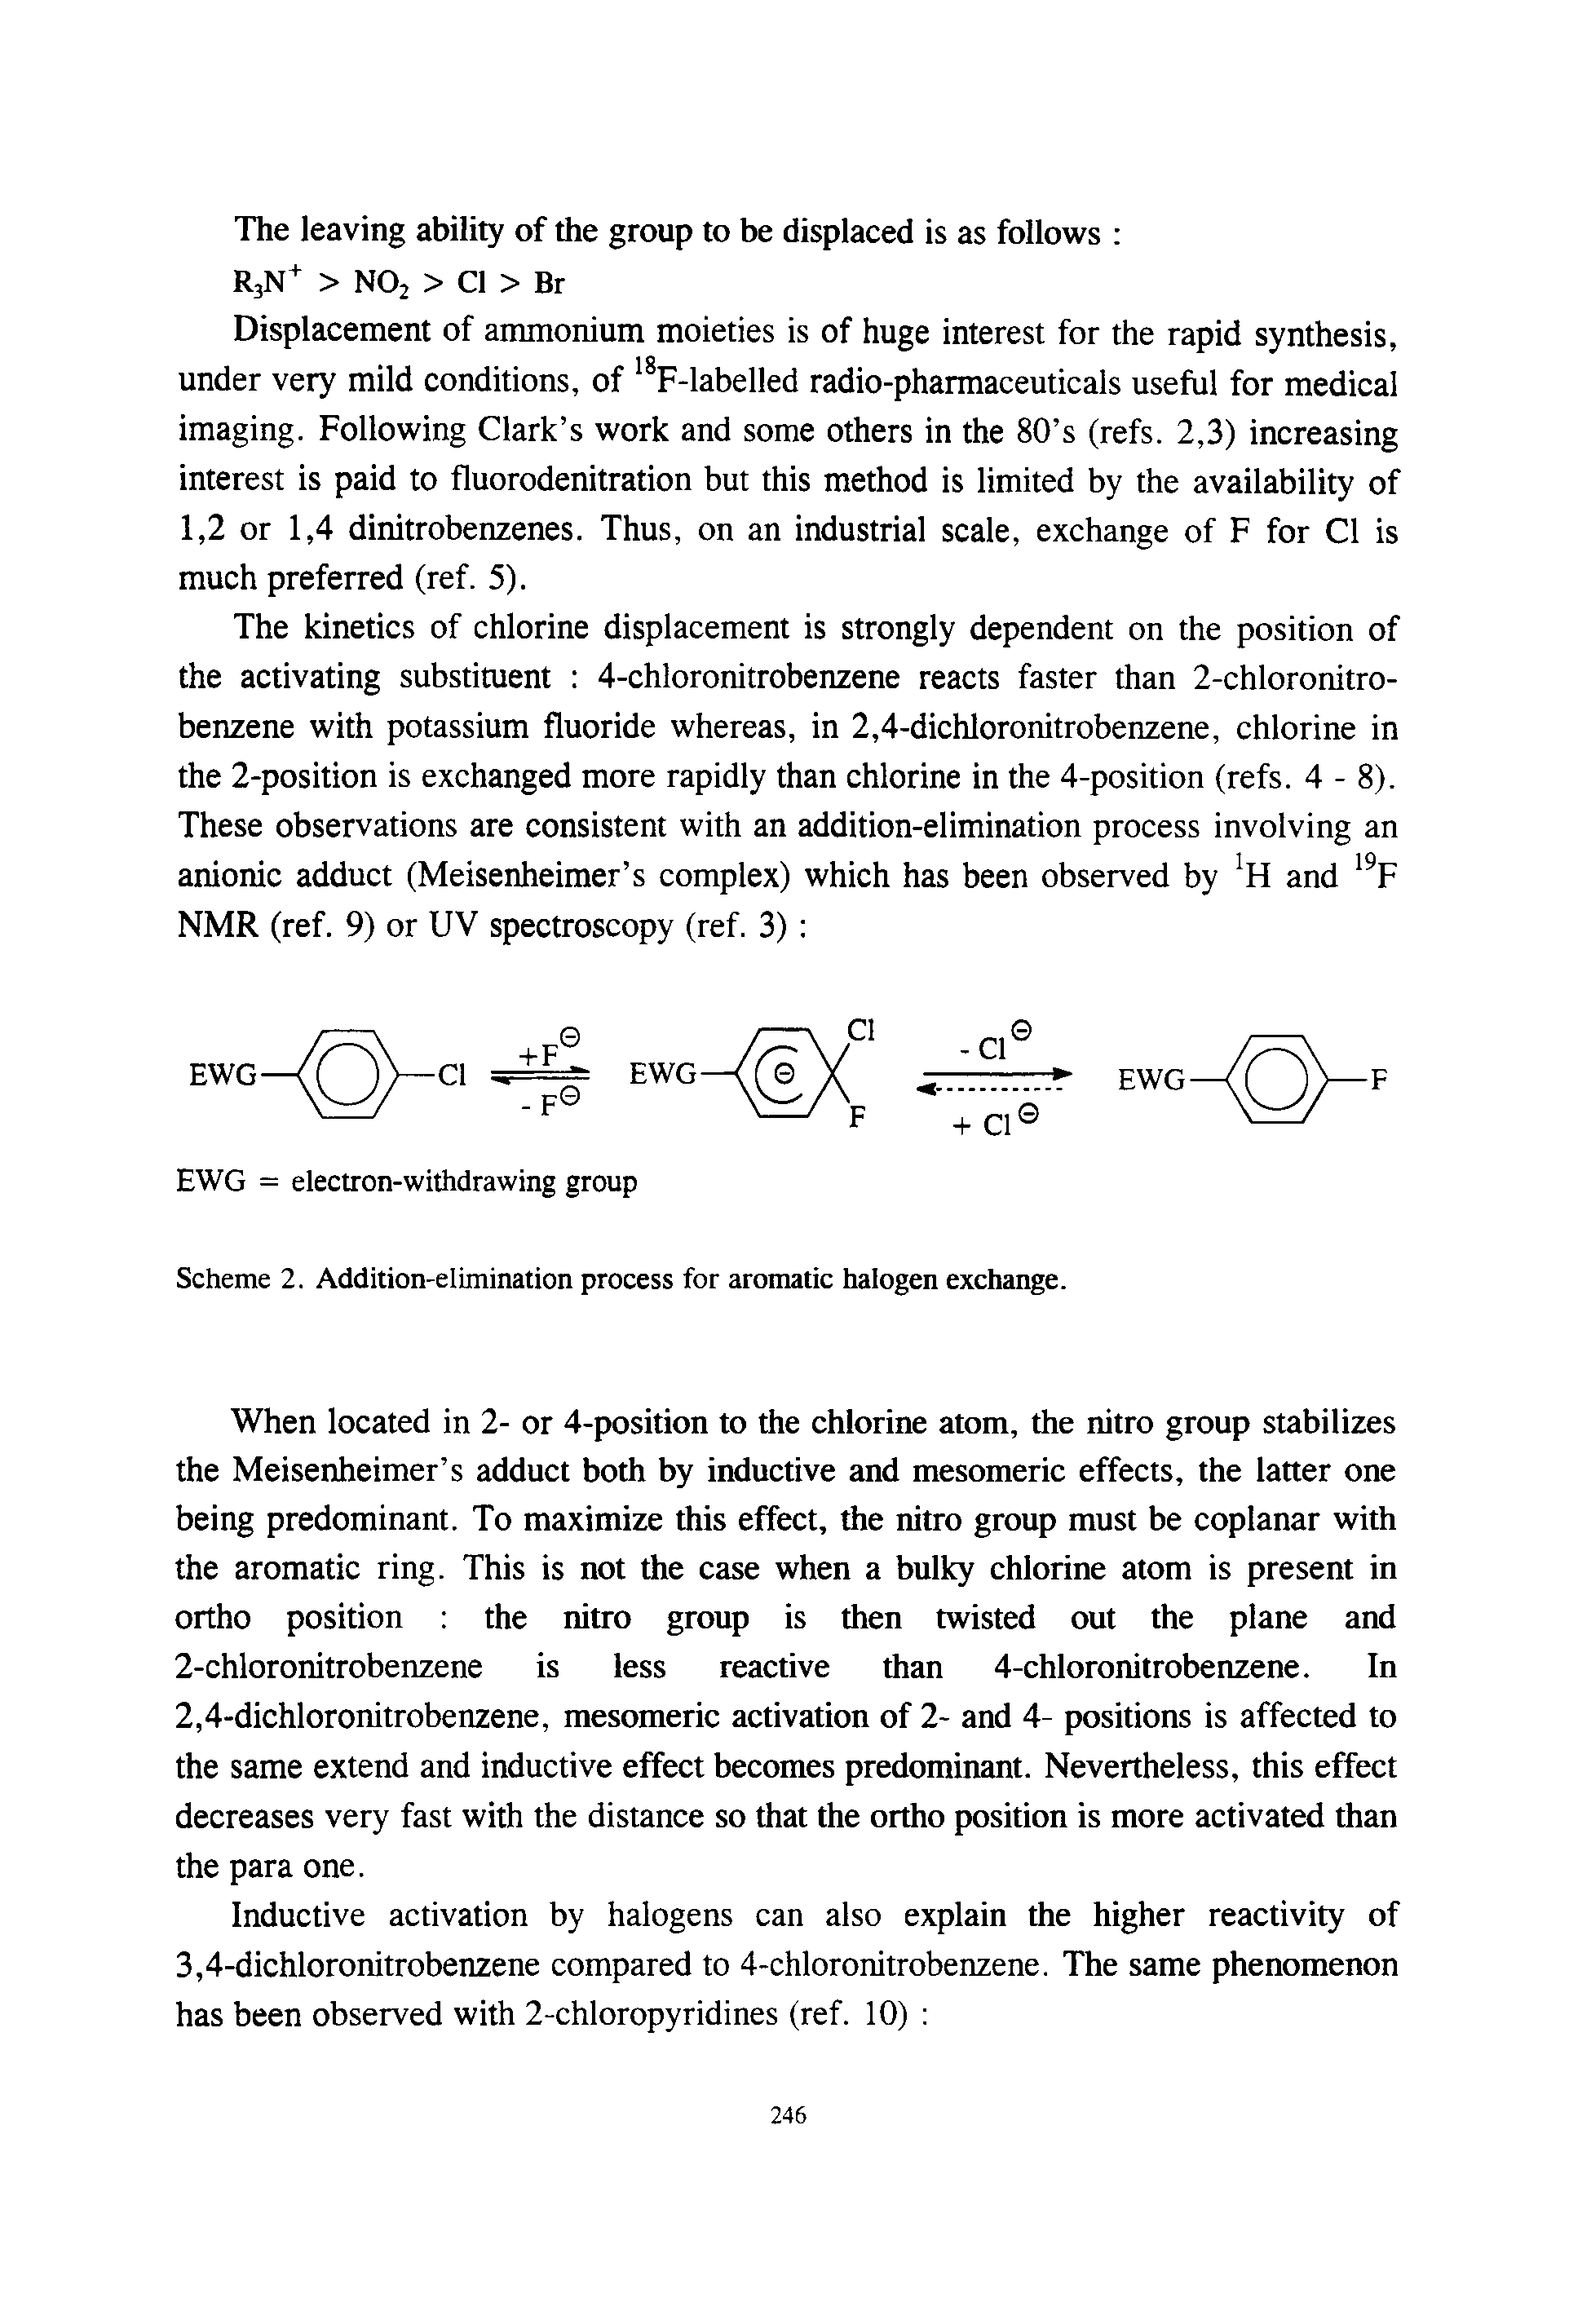 Scheme 2. Addition-elimination process for aromatic halogen exchange.